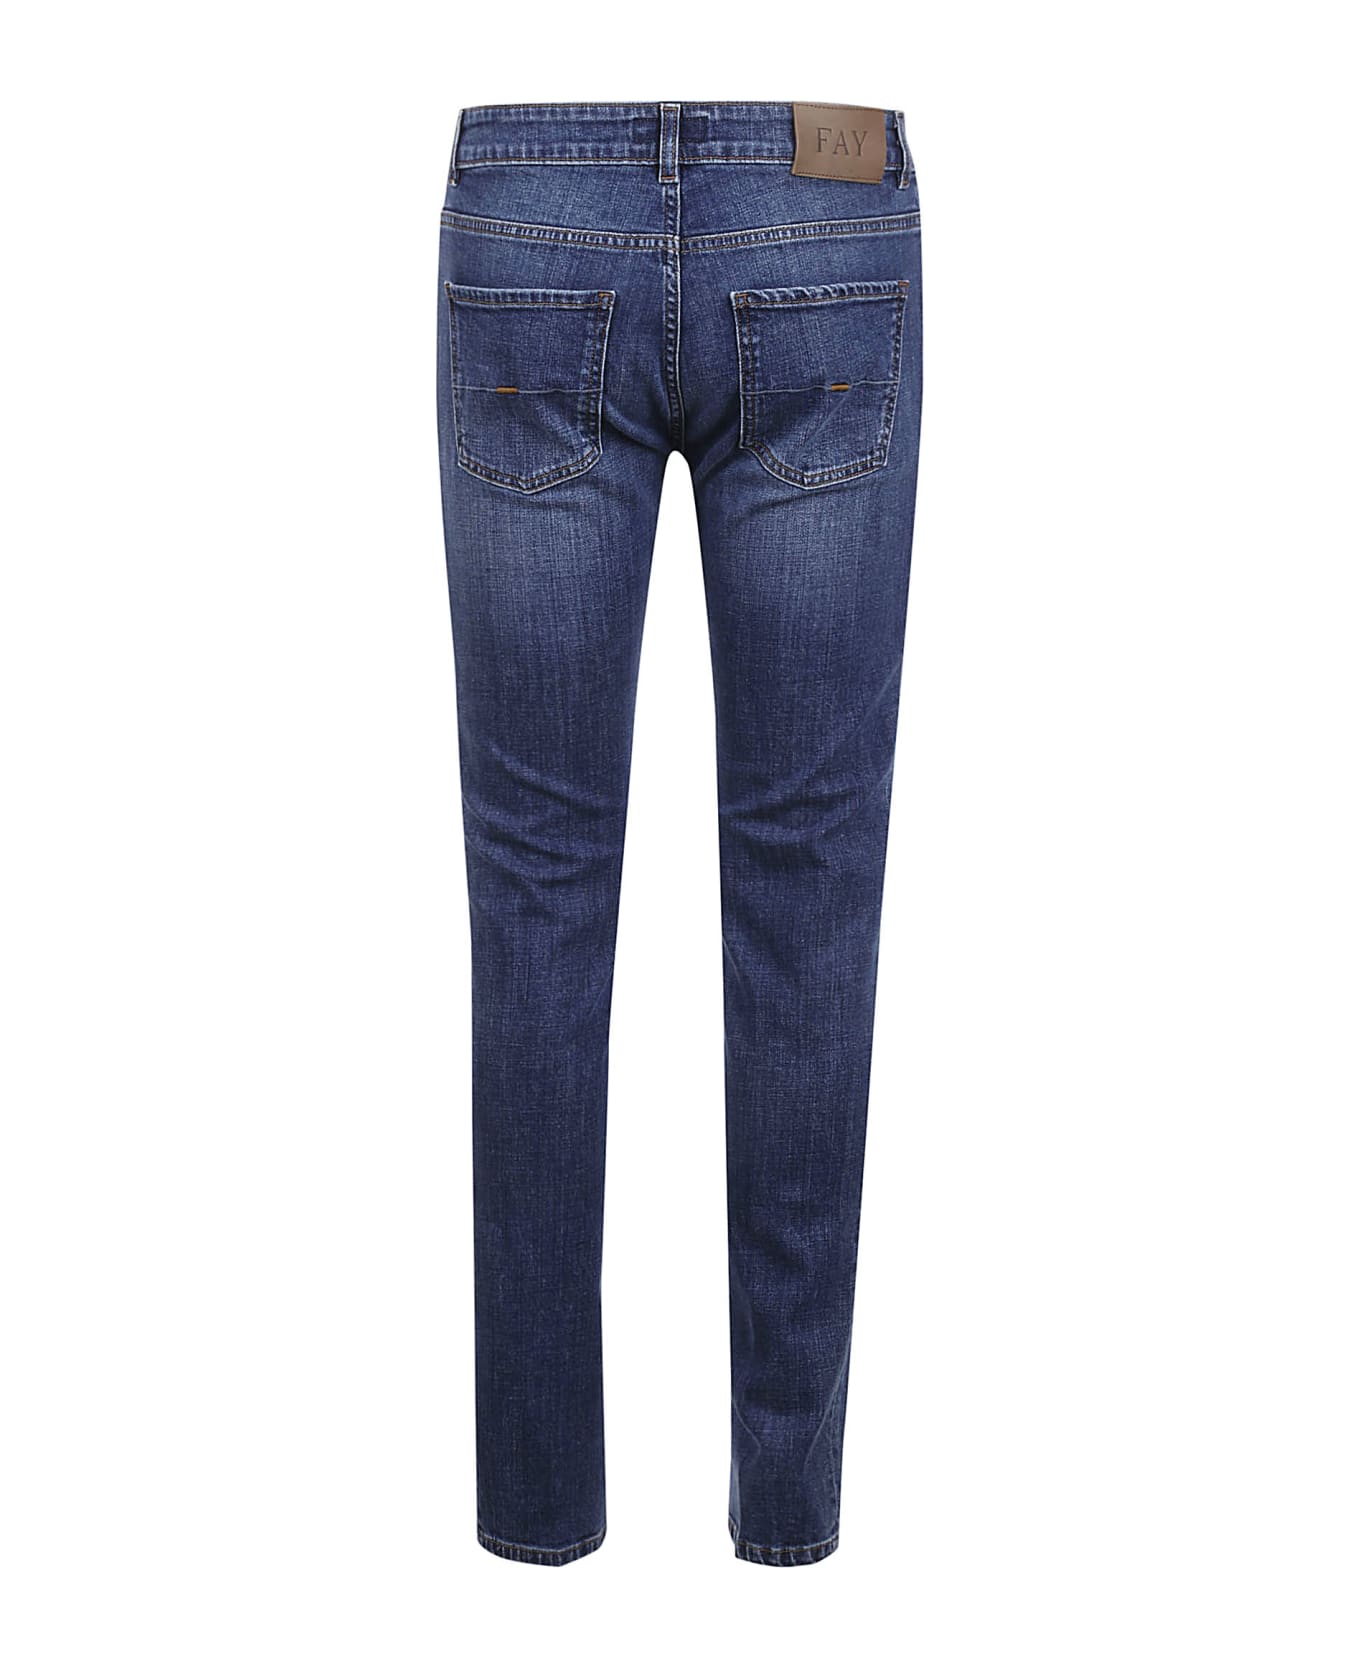 Fay Classic 5 Pockets Jeans - Blue デニム